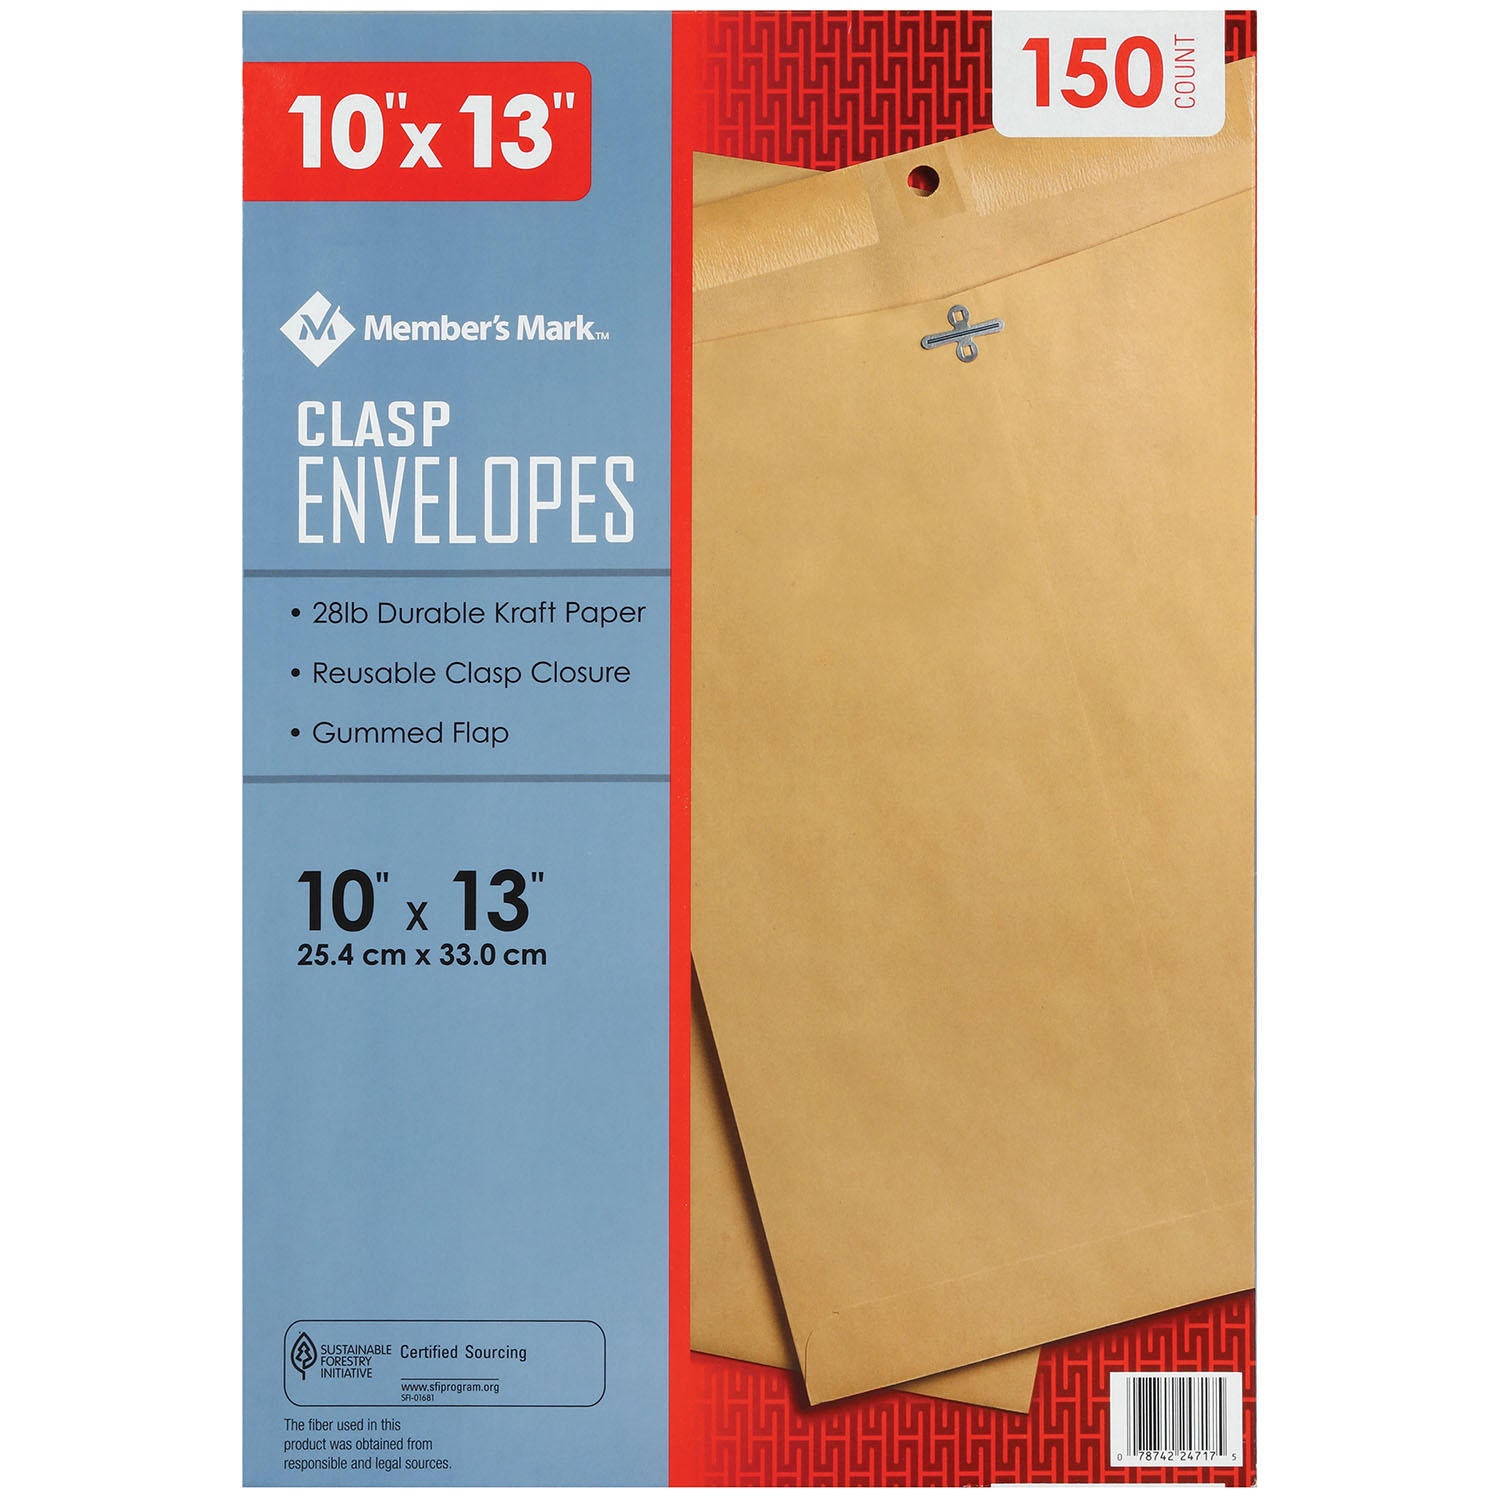 Member's Mark Clasp Envelope 10" x 13", 150 Ct